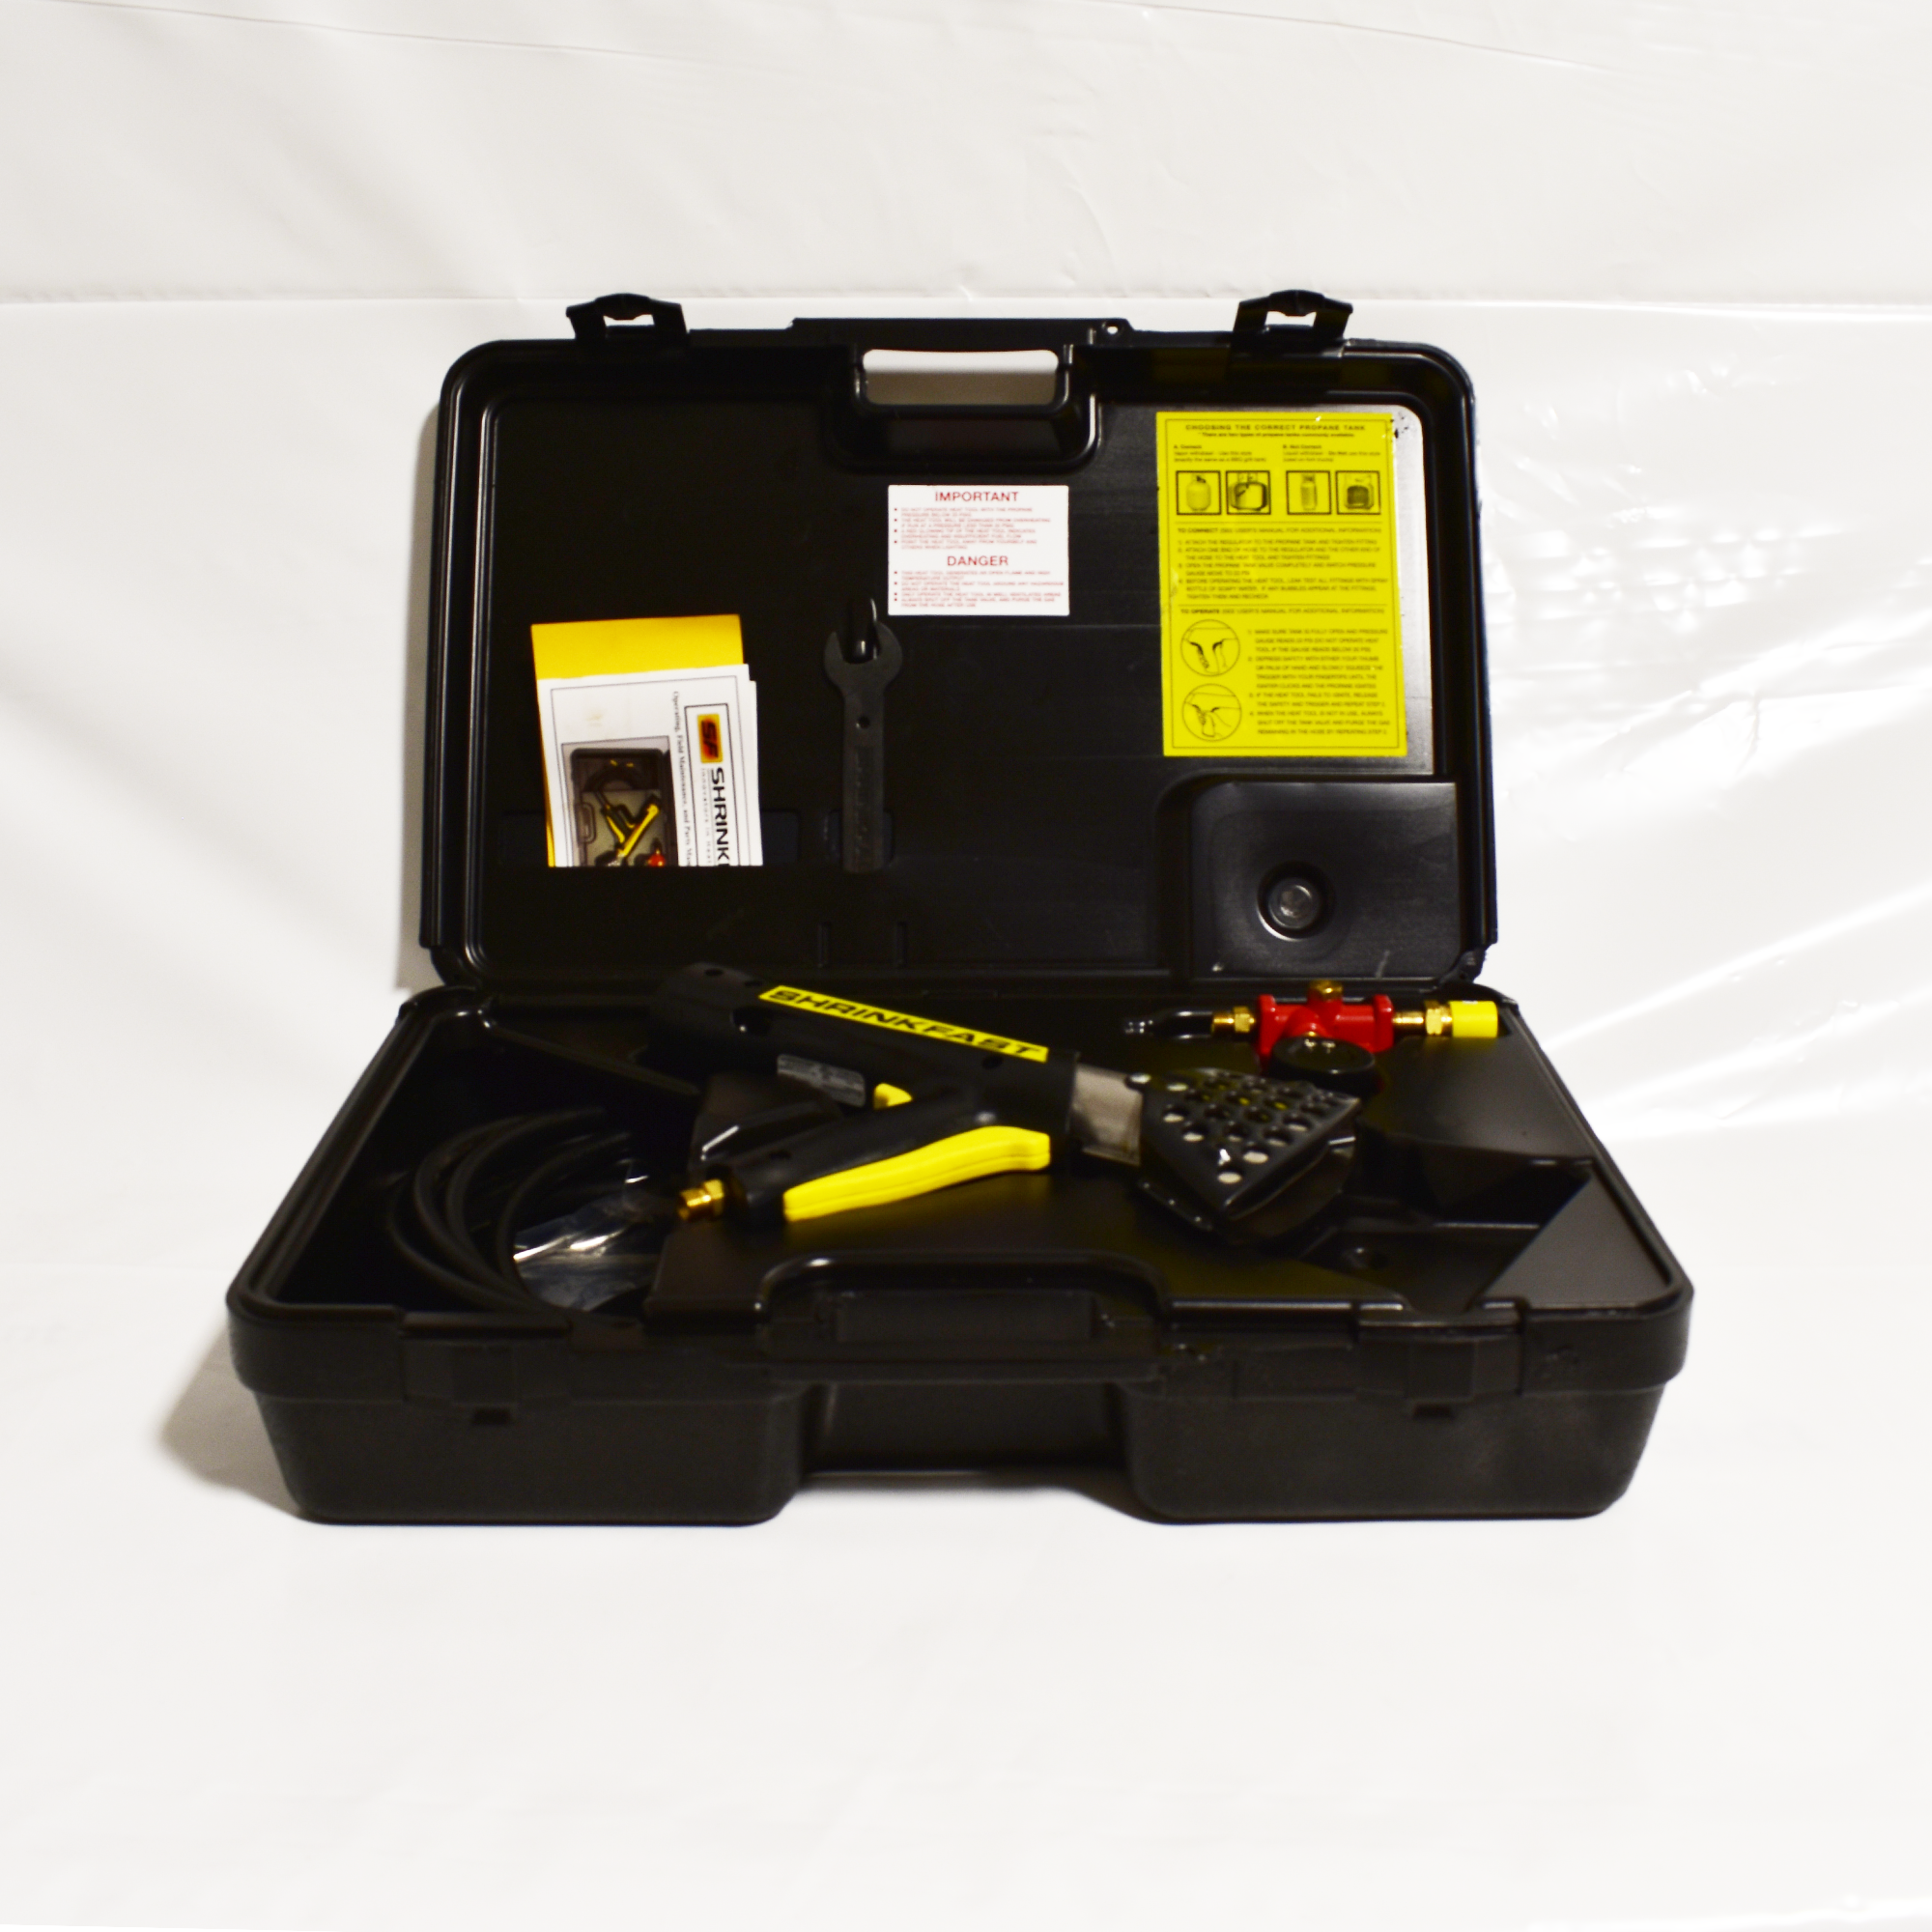 Shrinkfast MZ Heat Gun Kit with Carrying Case